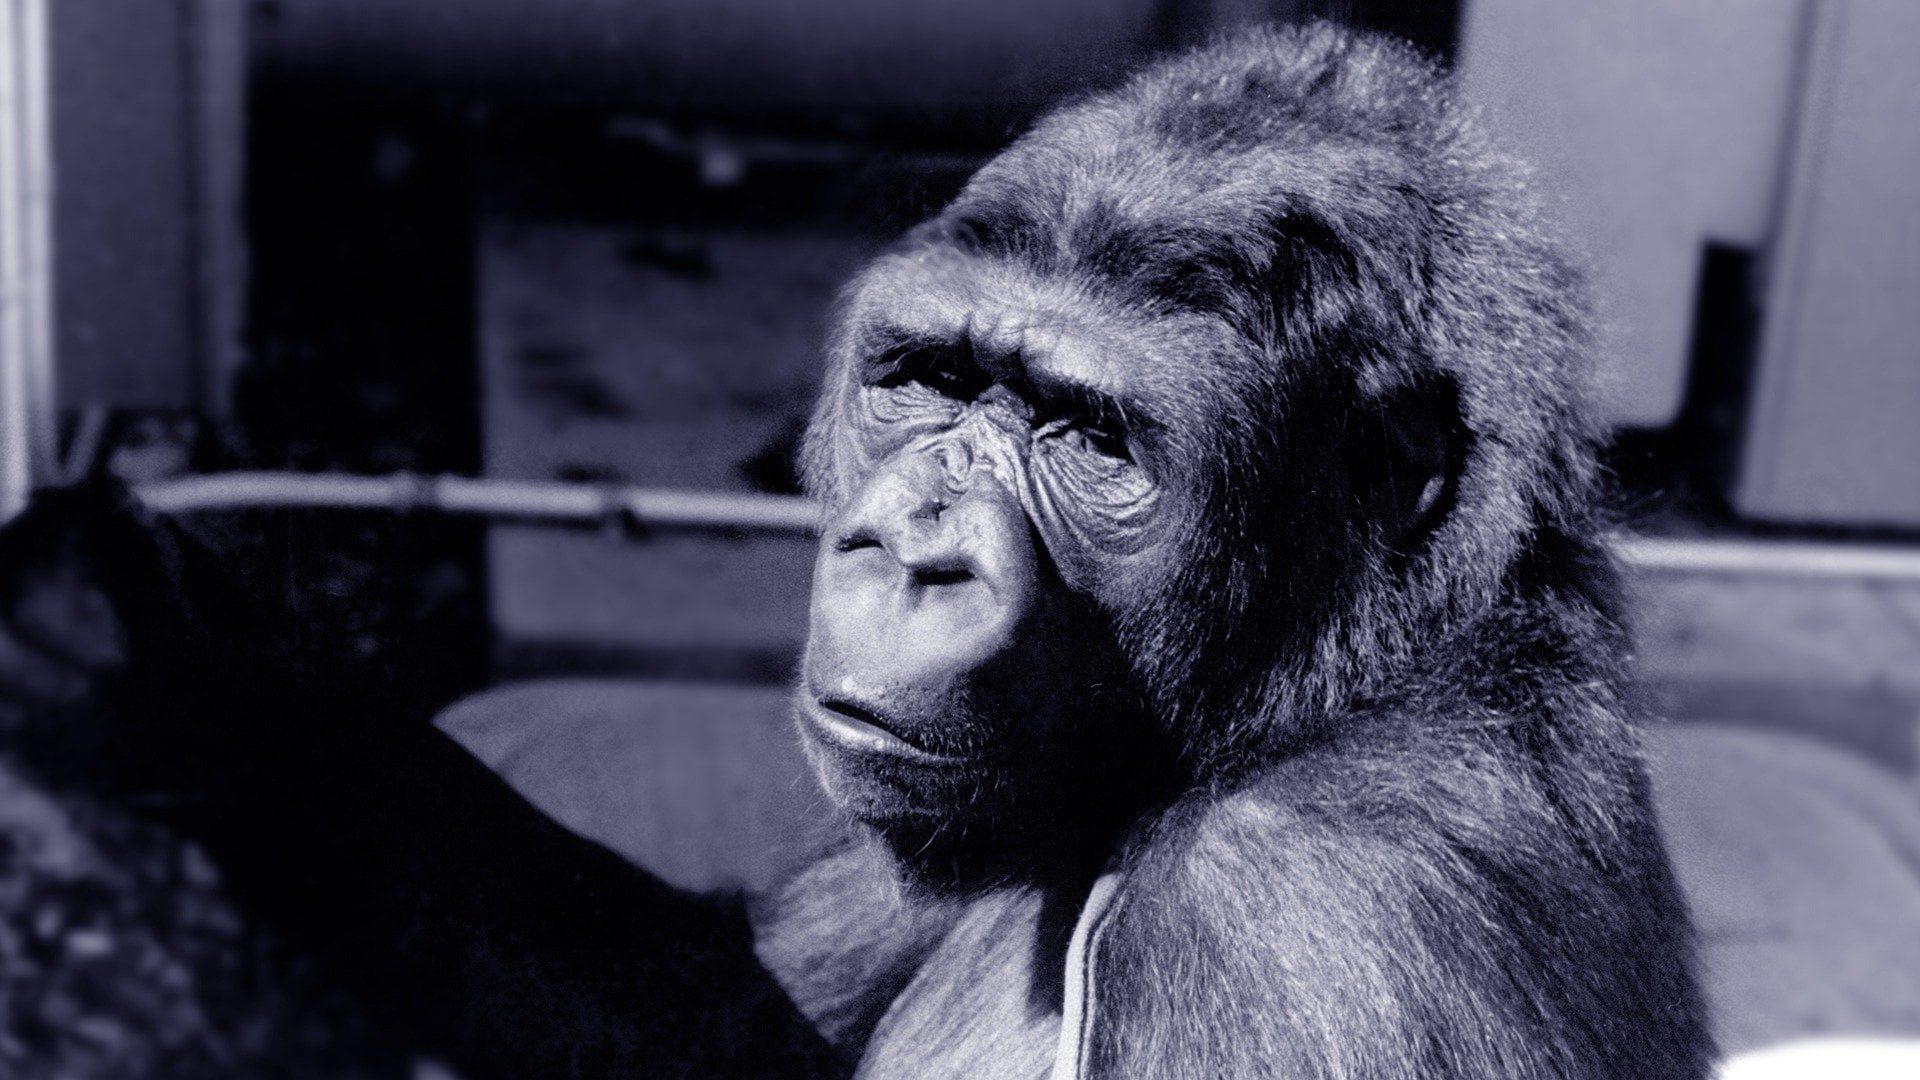 Koko: A Talking Gorilla background